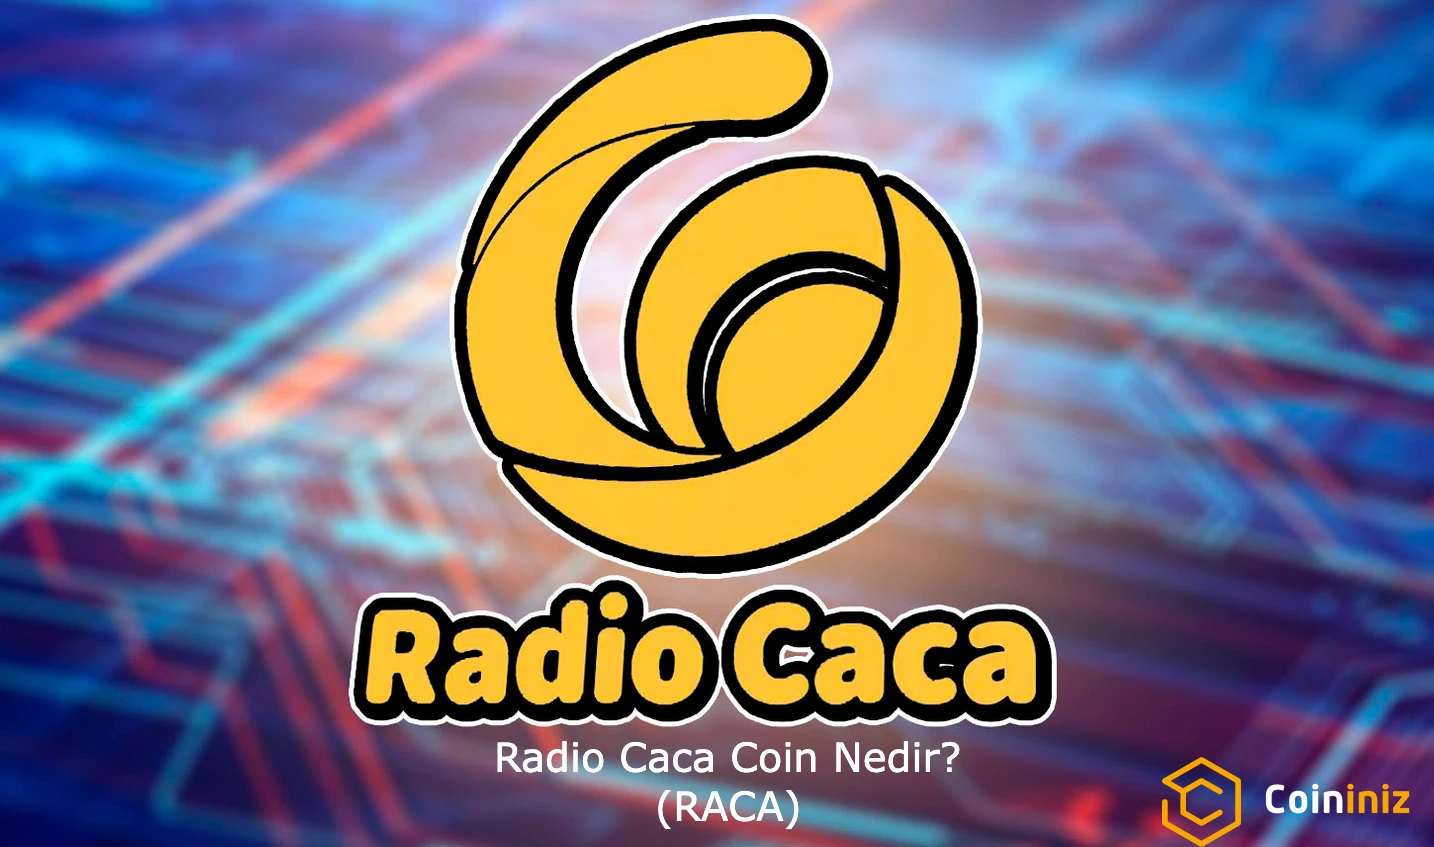 Radio Caca Coin Nedir? (RACA)